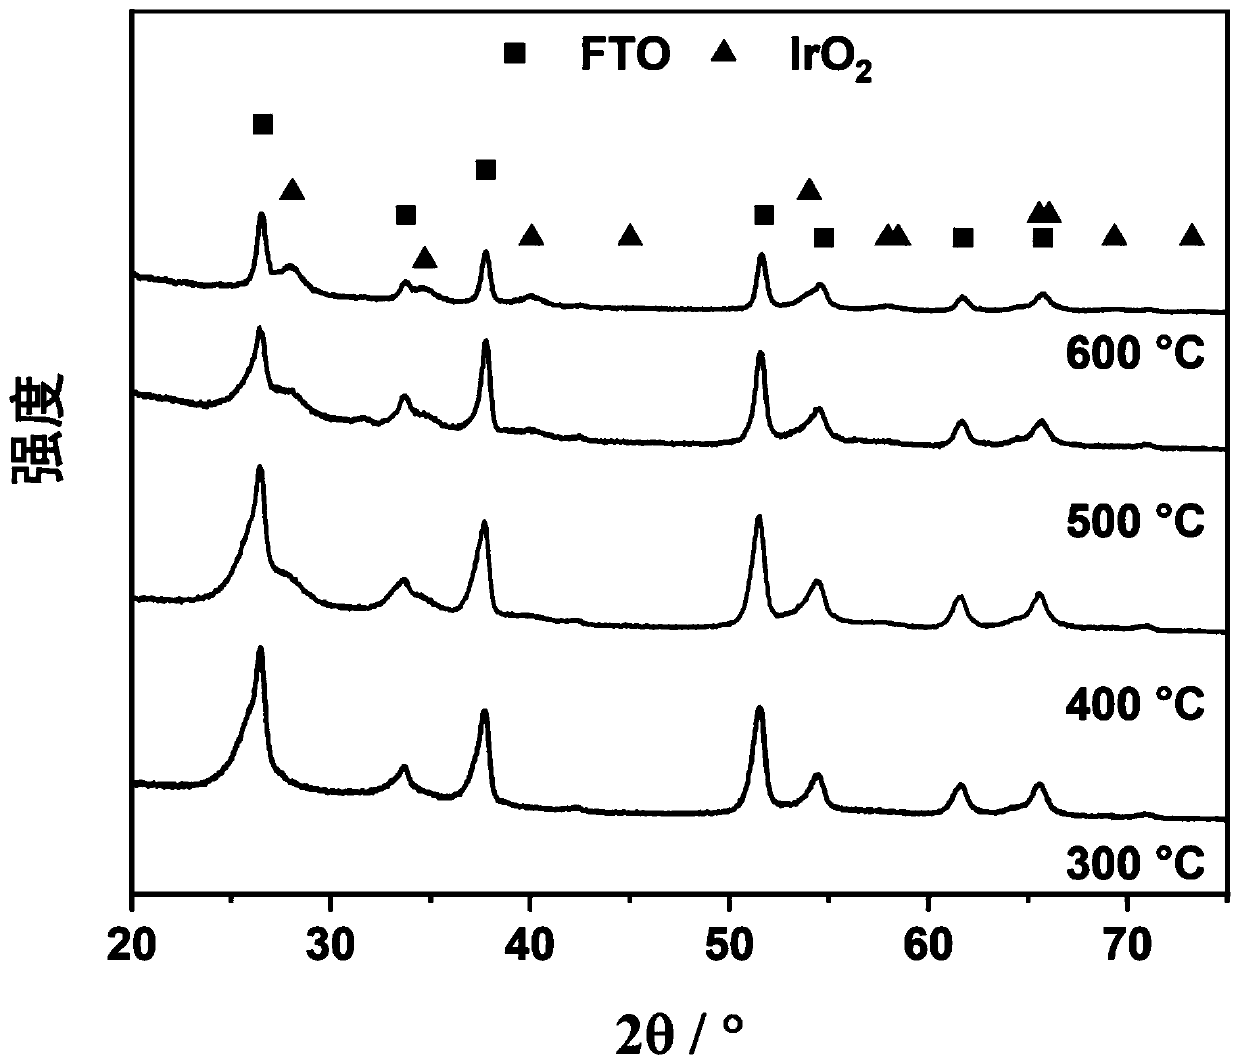 Preparation method and application of iridium oxide nanoparticle catalyst